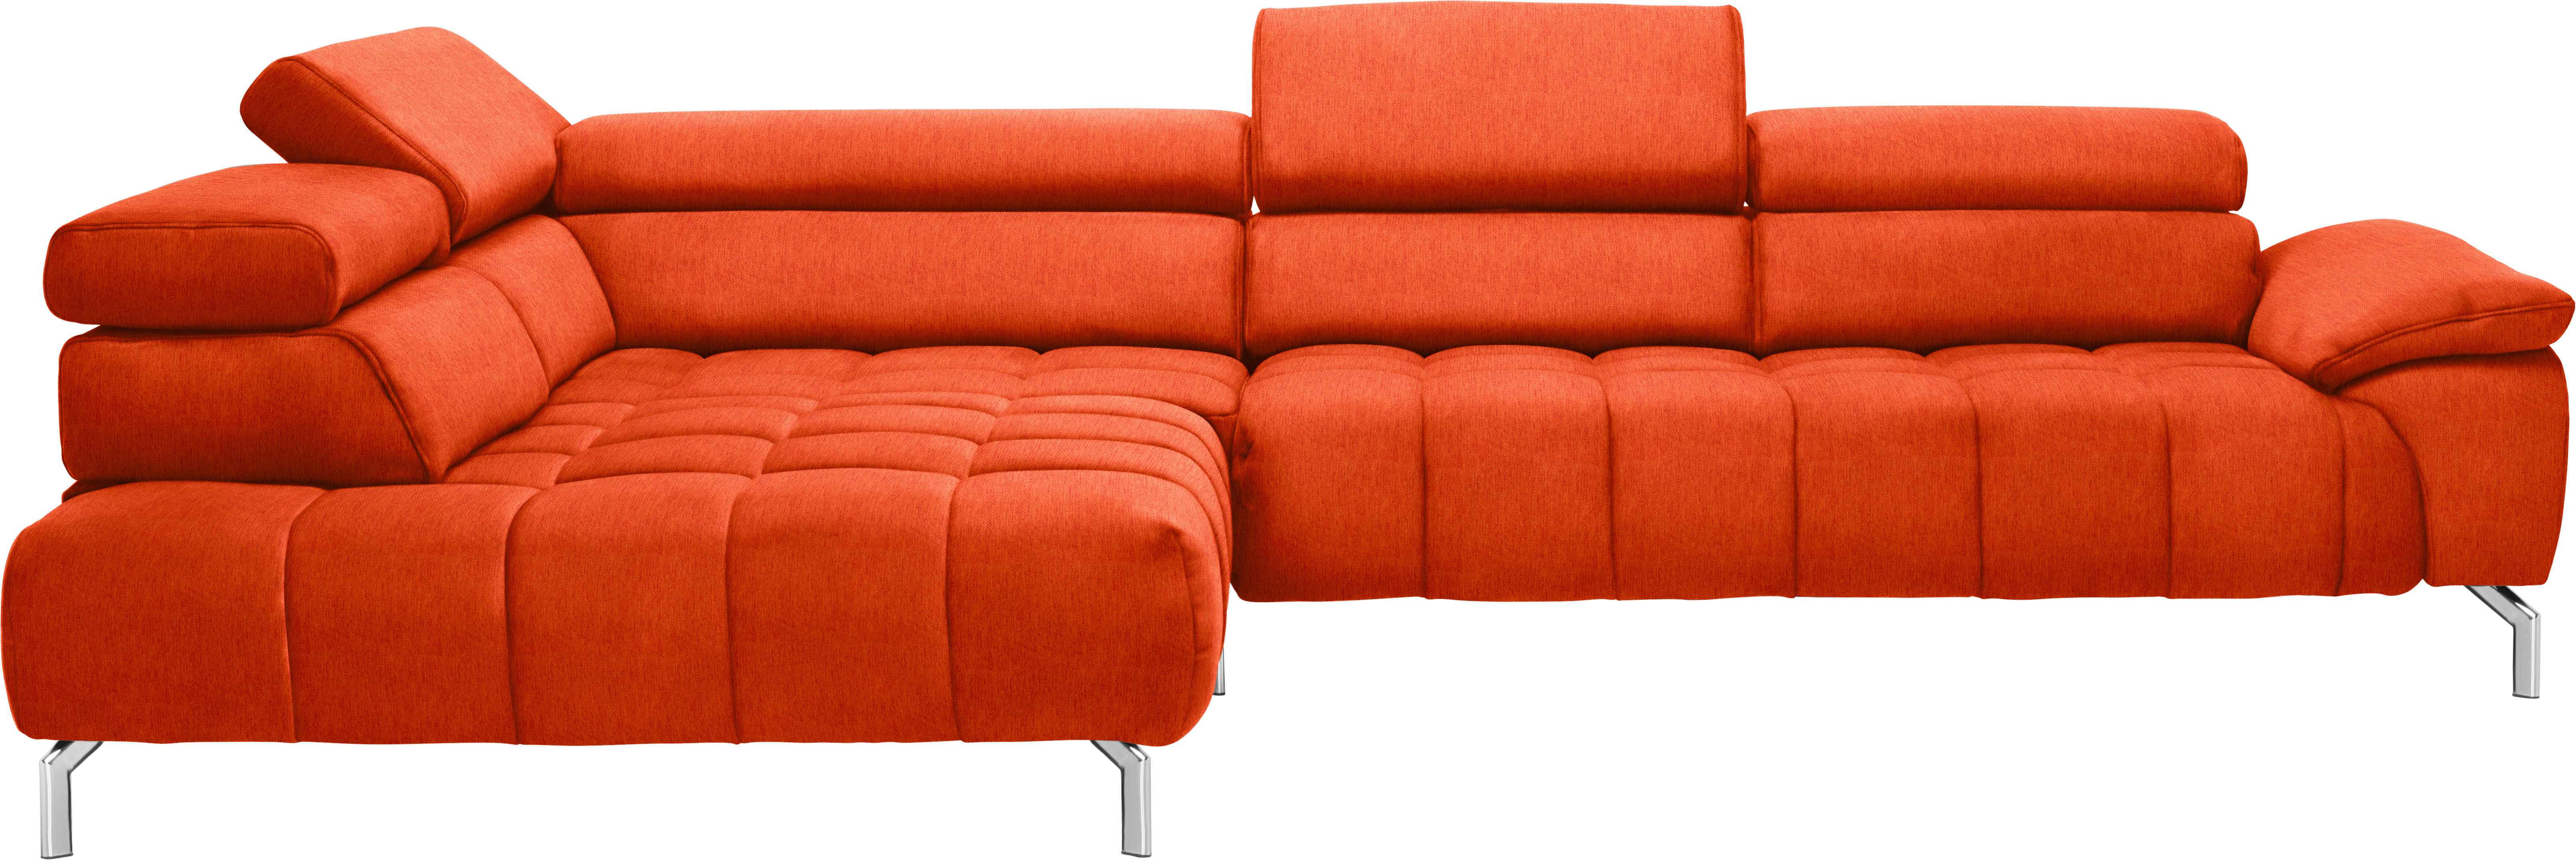 ECKSOFA Orange Chenille  - Chromfarben/Orange, Design, Textil/Metall (222/323cm) - Beldomo Style